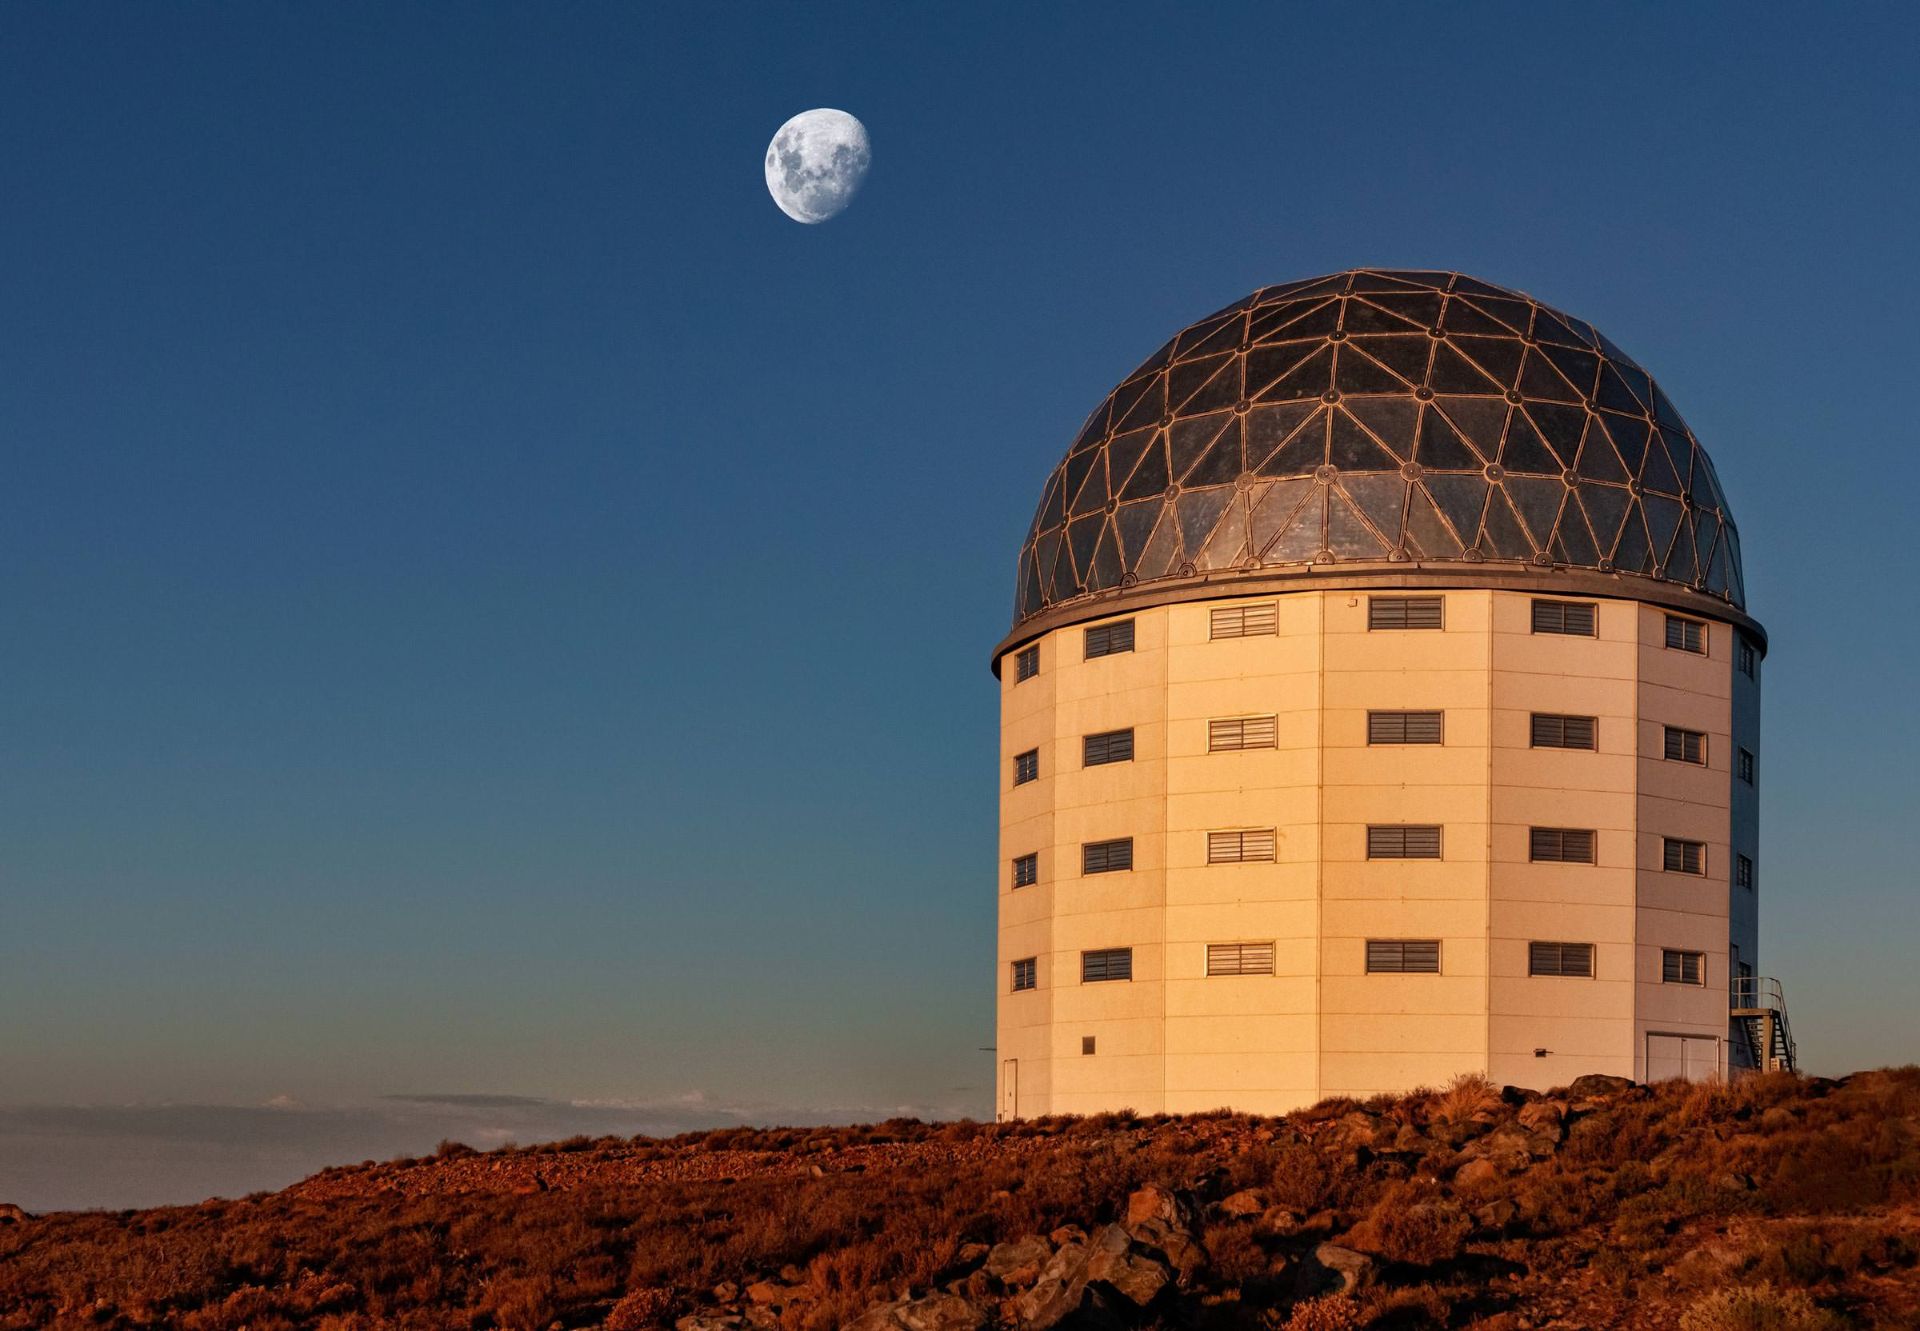 مرجع متخصصين ايران تلسكوپ بزرگ آفريقاي جنوبي (SALT)